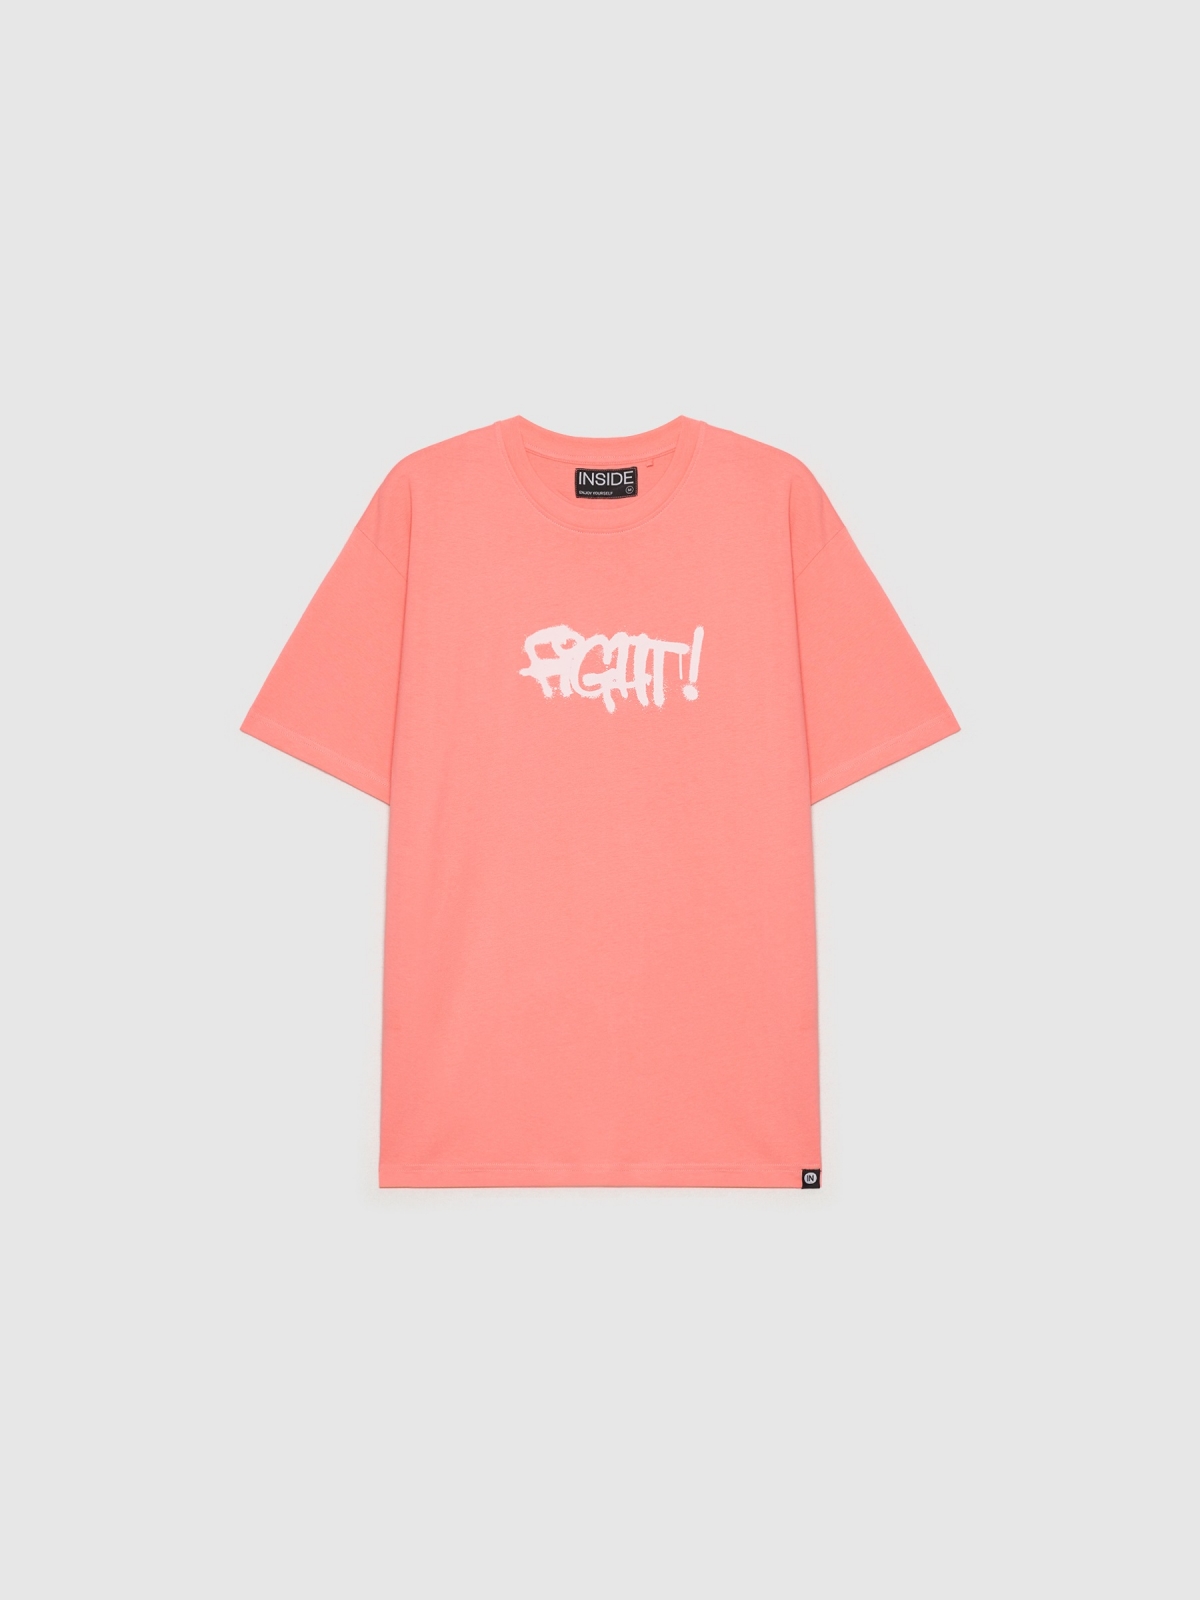  T-shirt "Fight!" rosa